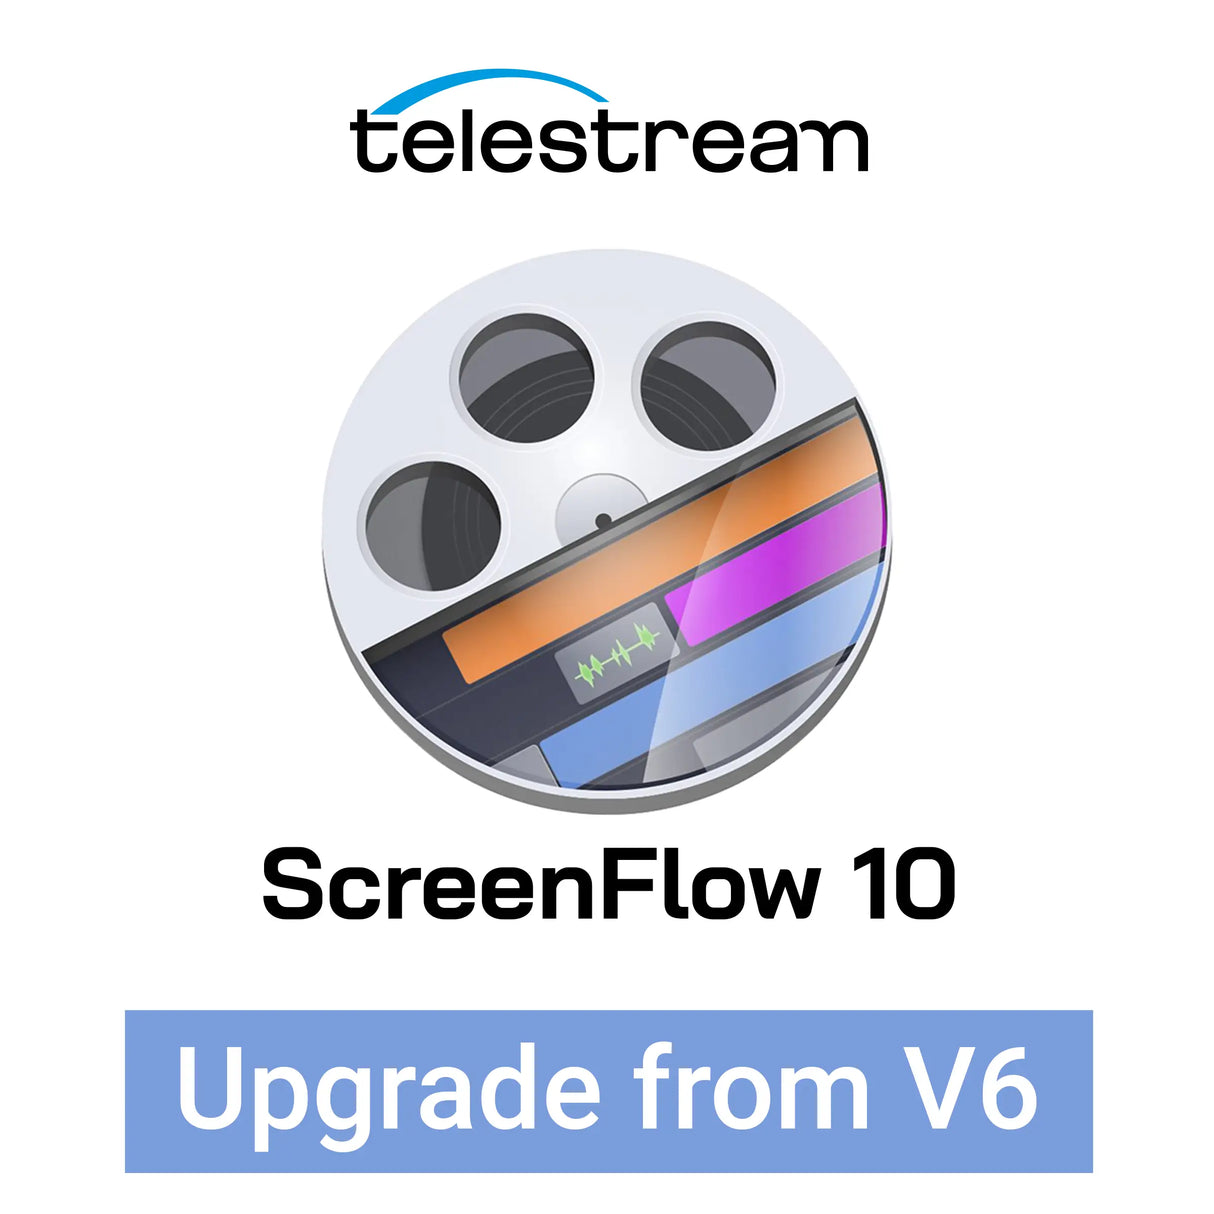 Telestream ScreenFlow 10 Video Editing Software Upgrade from V6